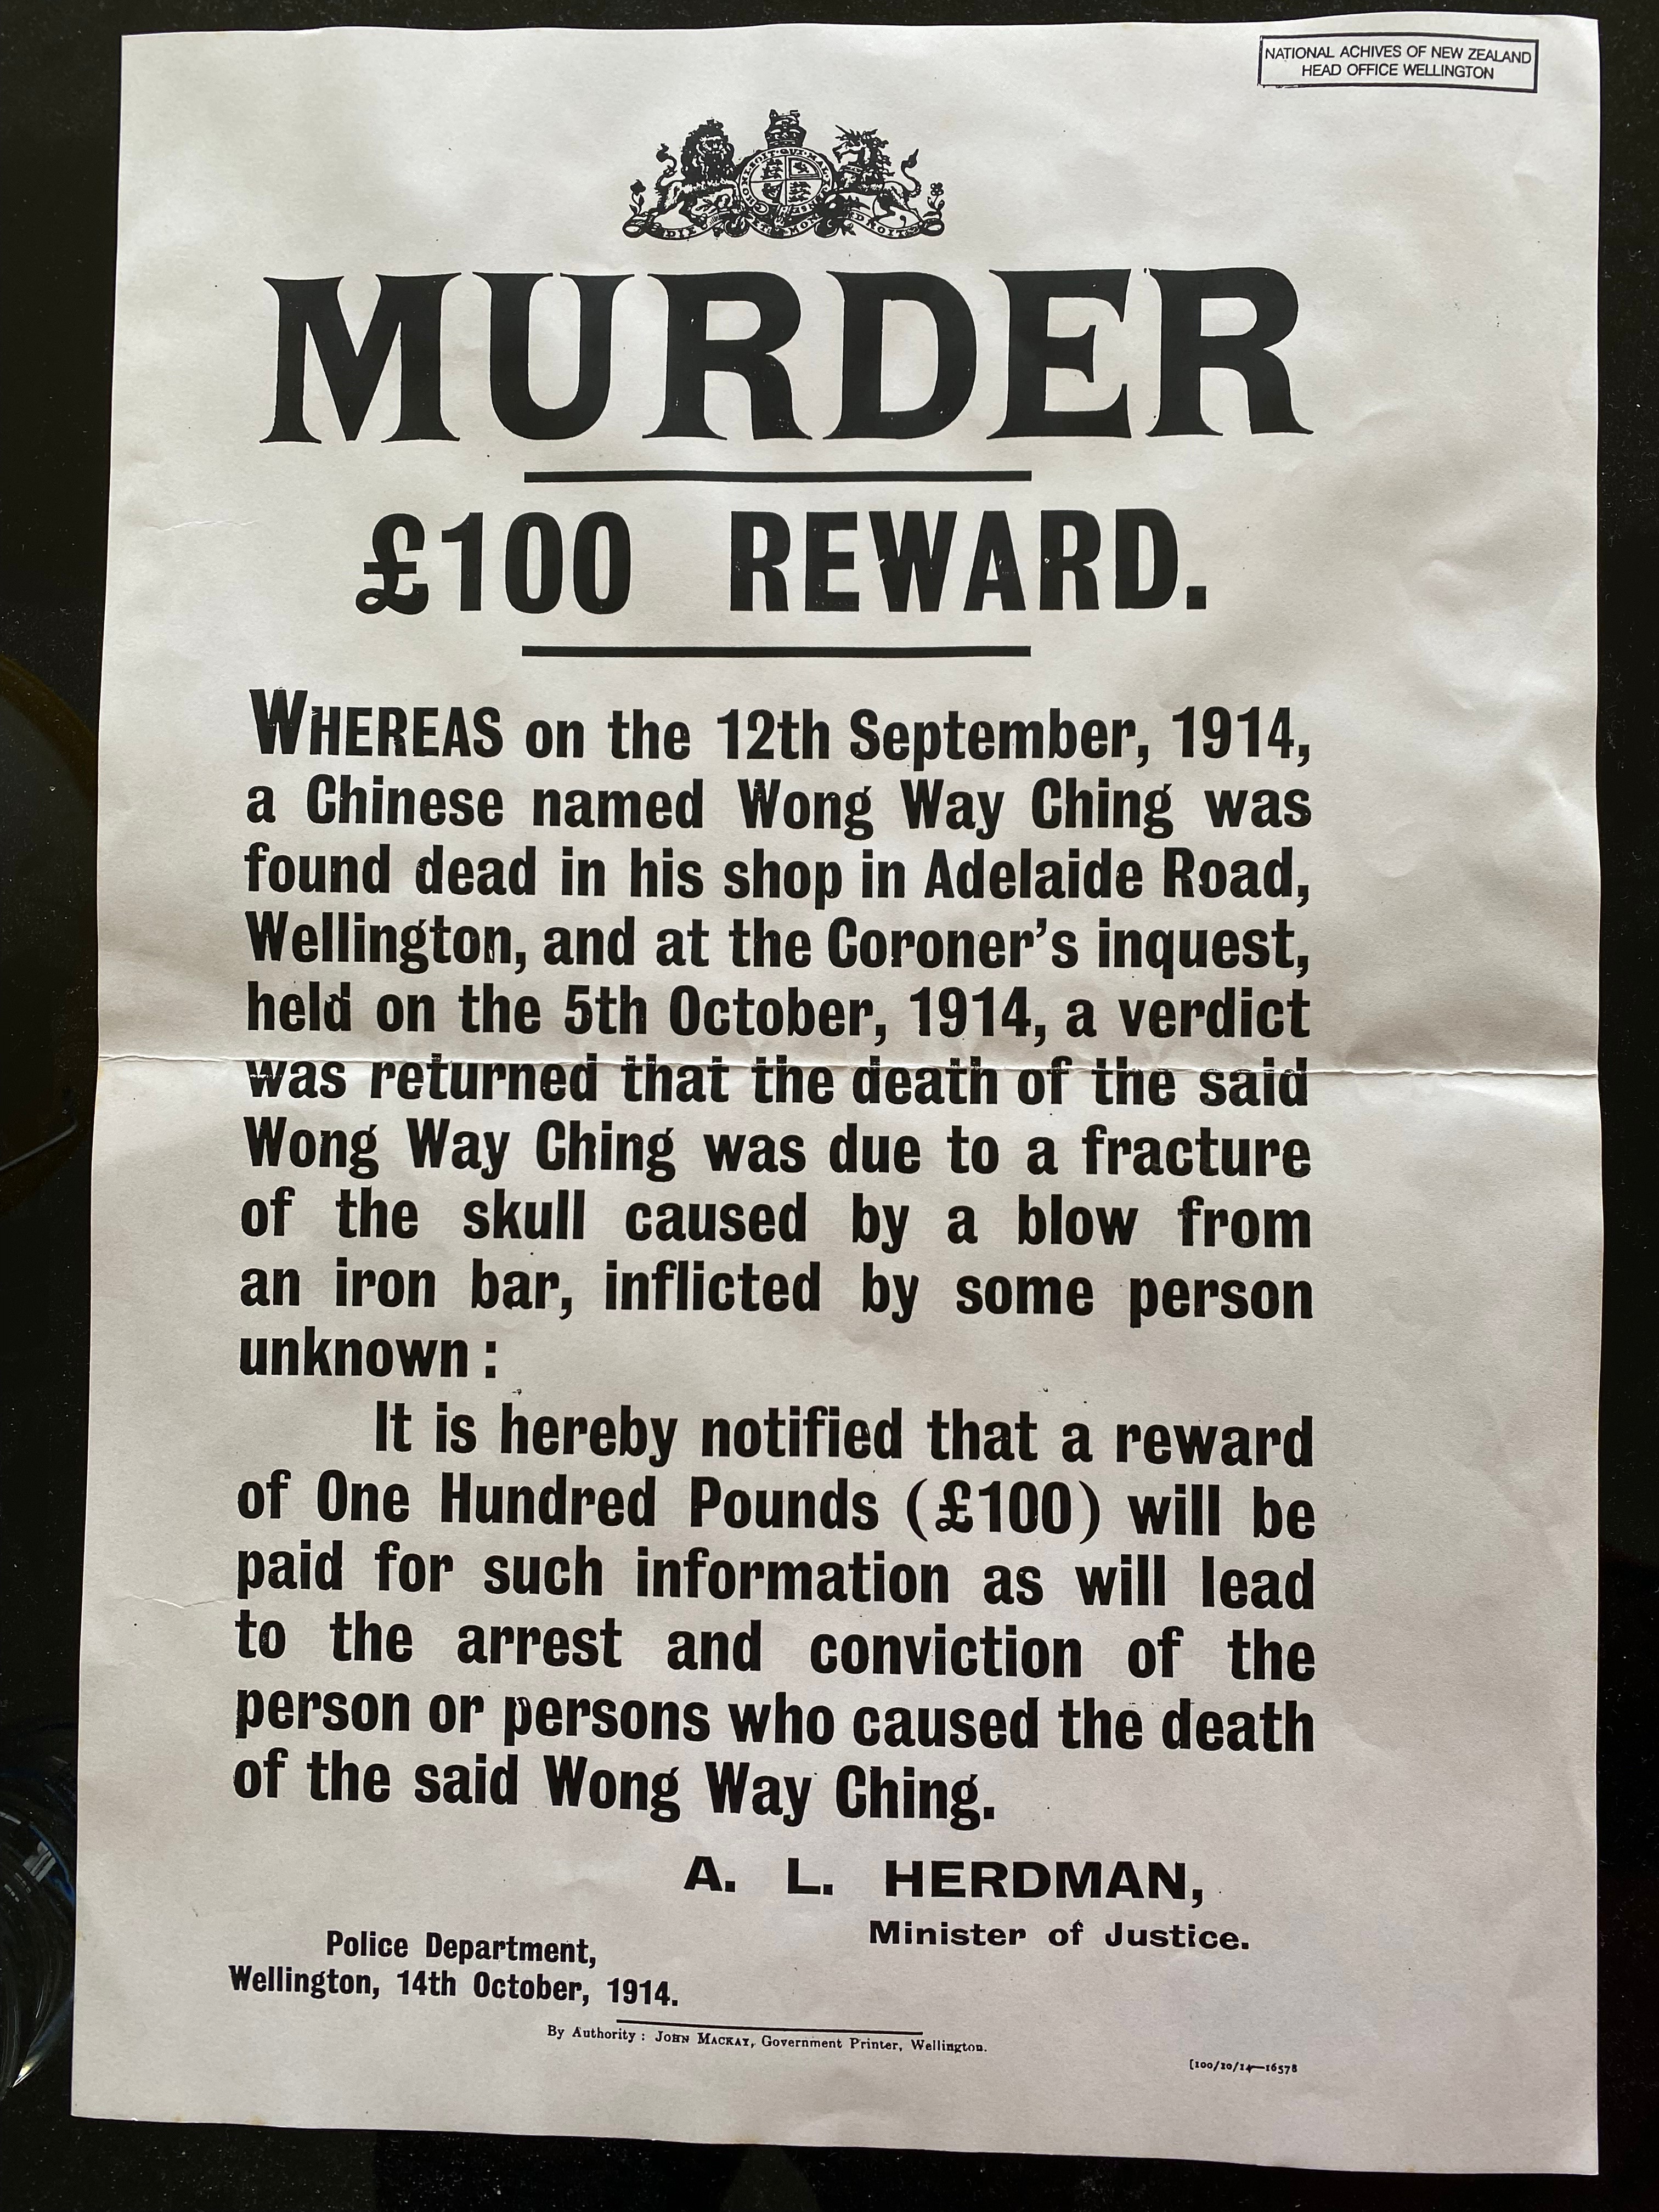 Reward notice offering a £100 reward